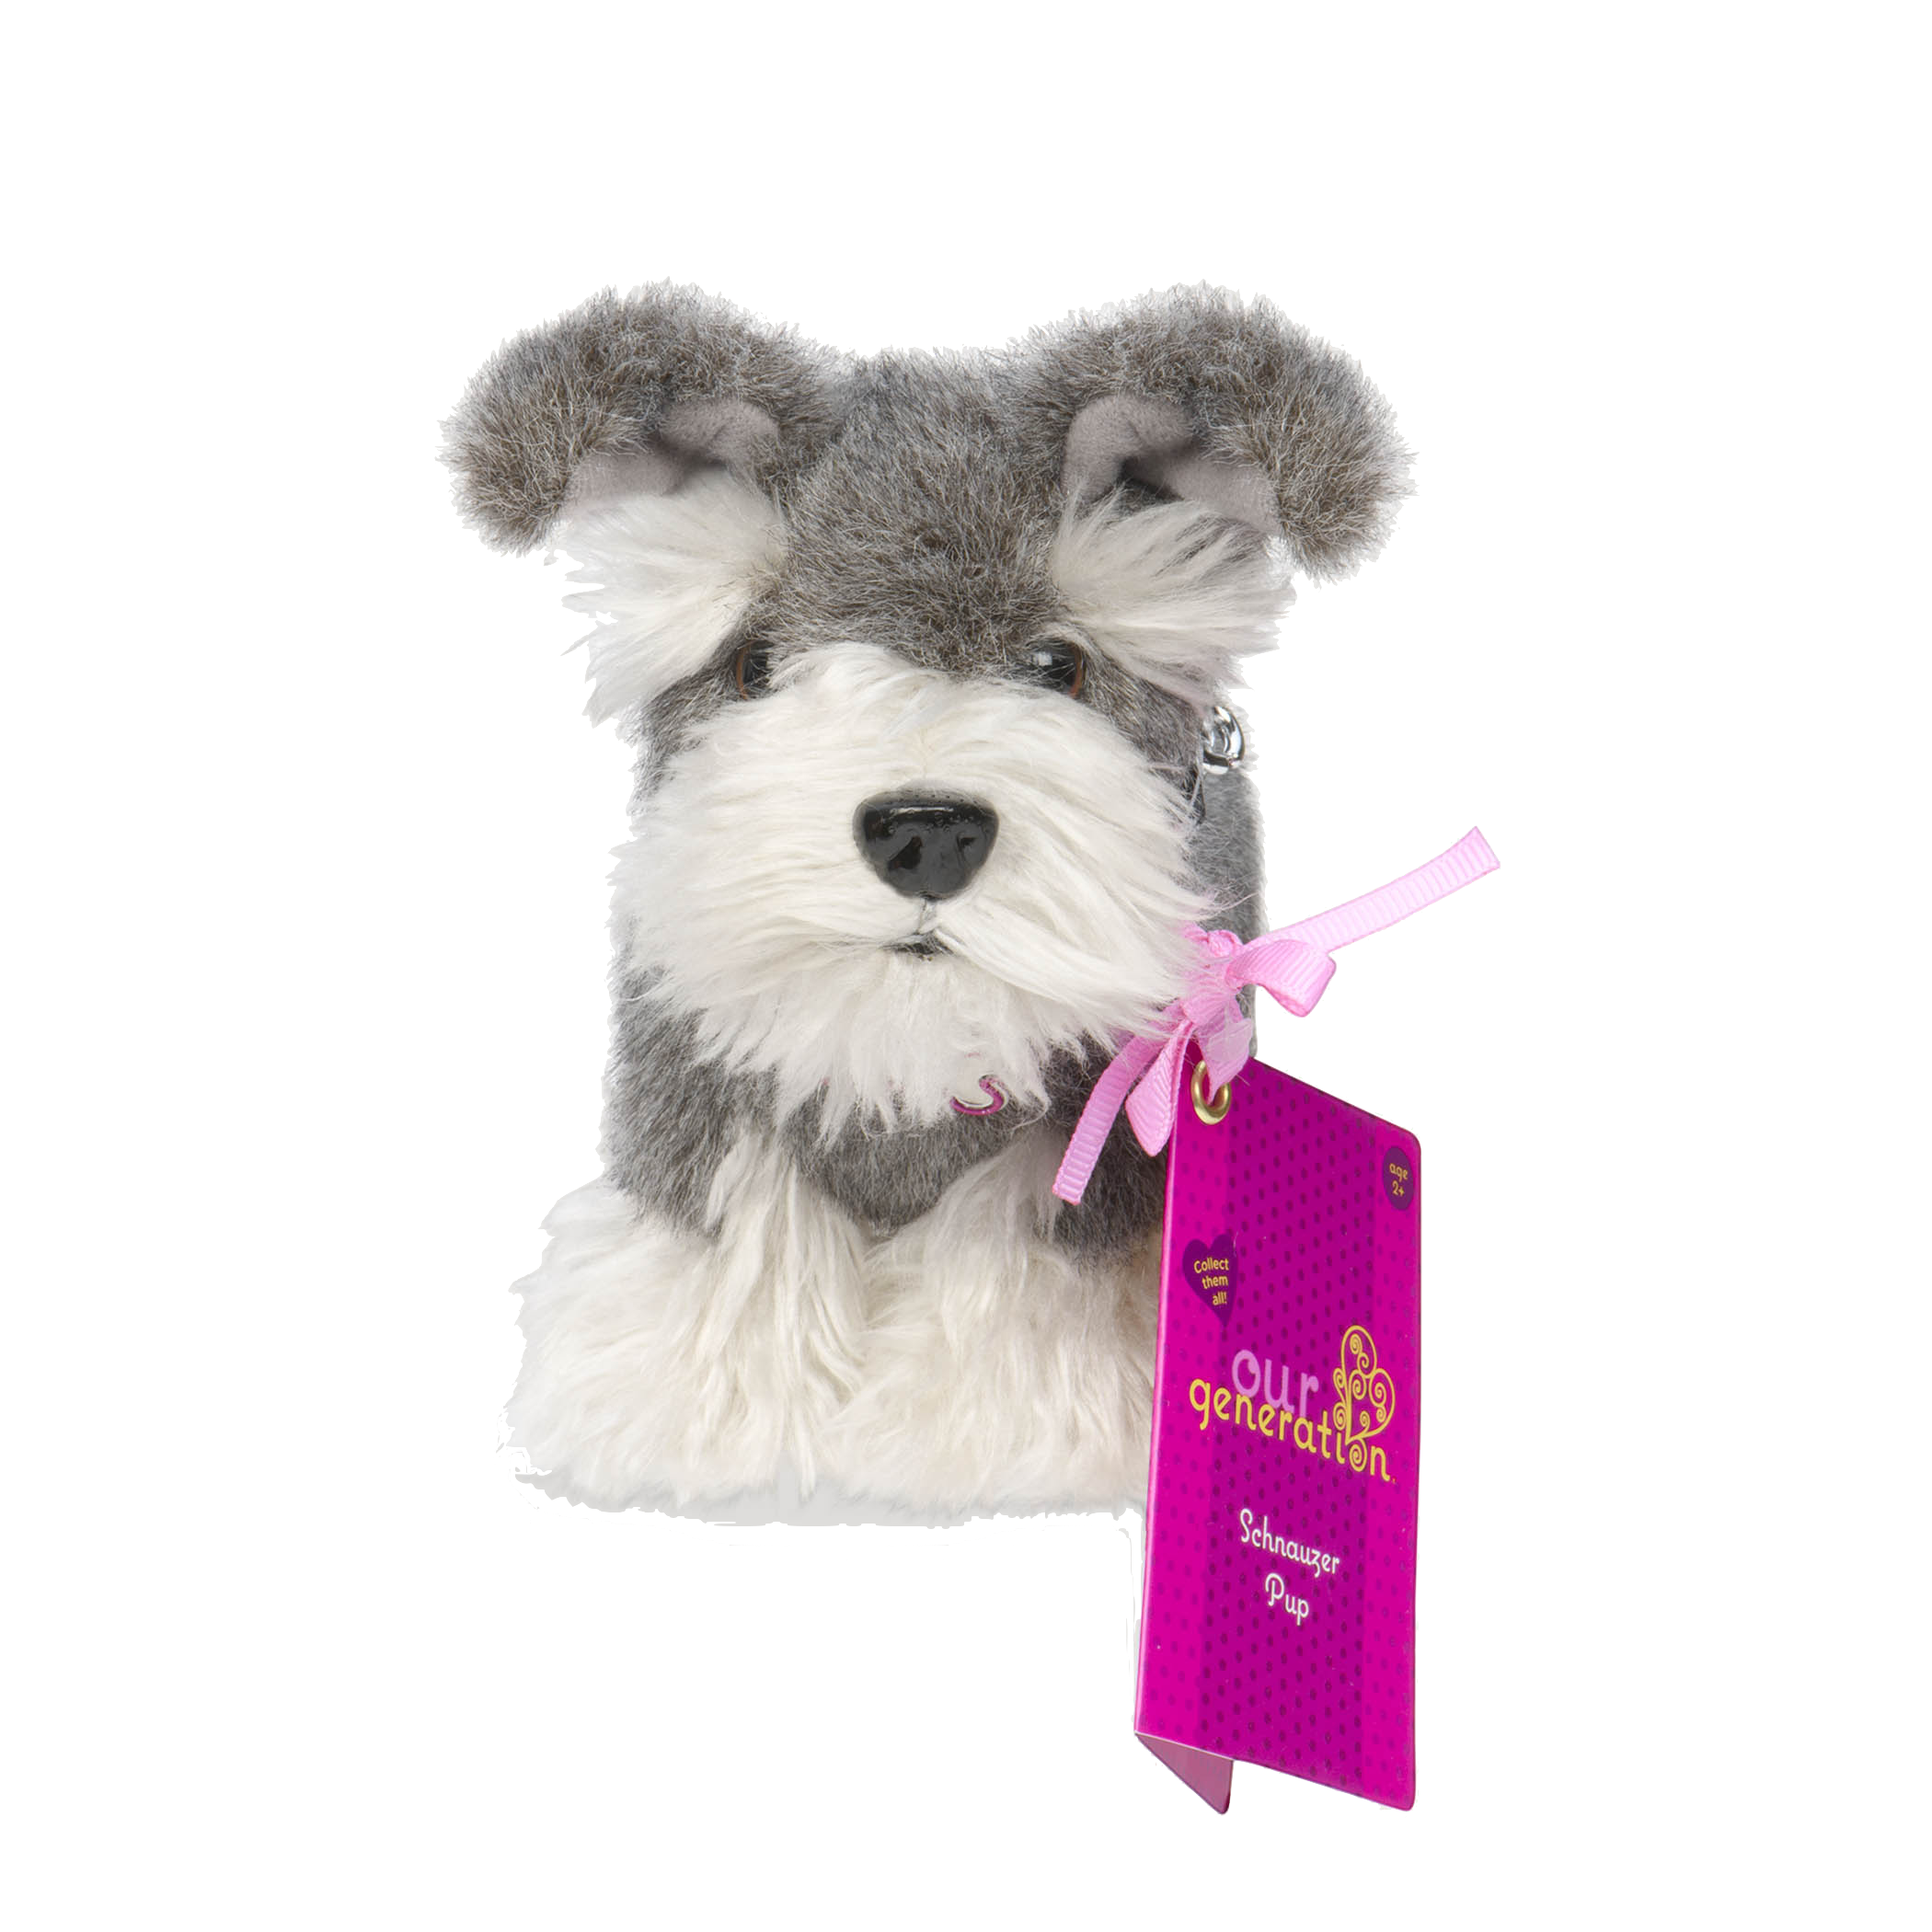 Schnauzer pup package01